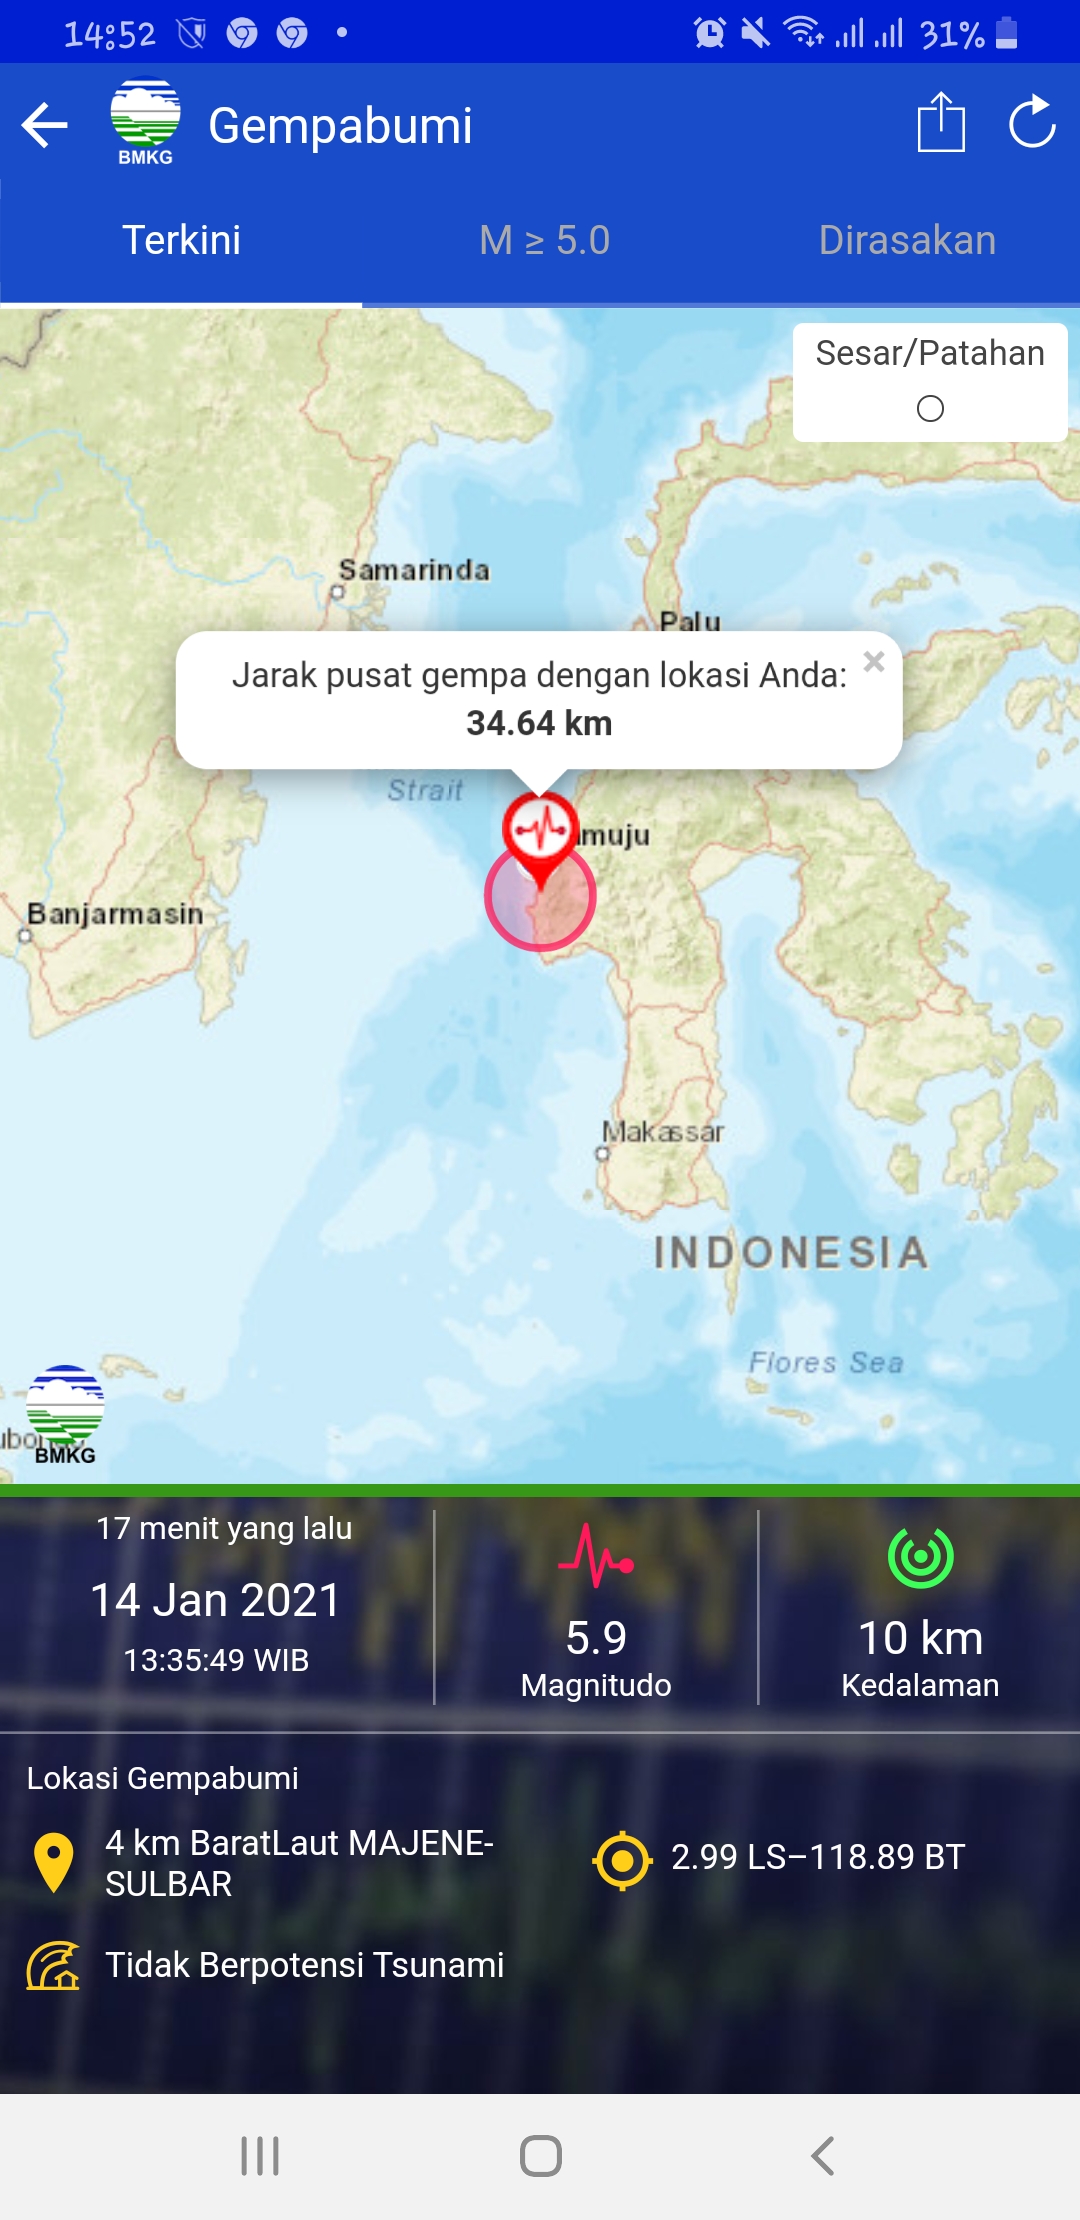 Gempa 5,9 SR Tidak Berpotensi Tsunami